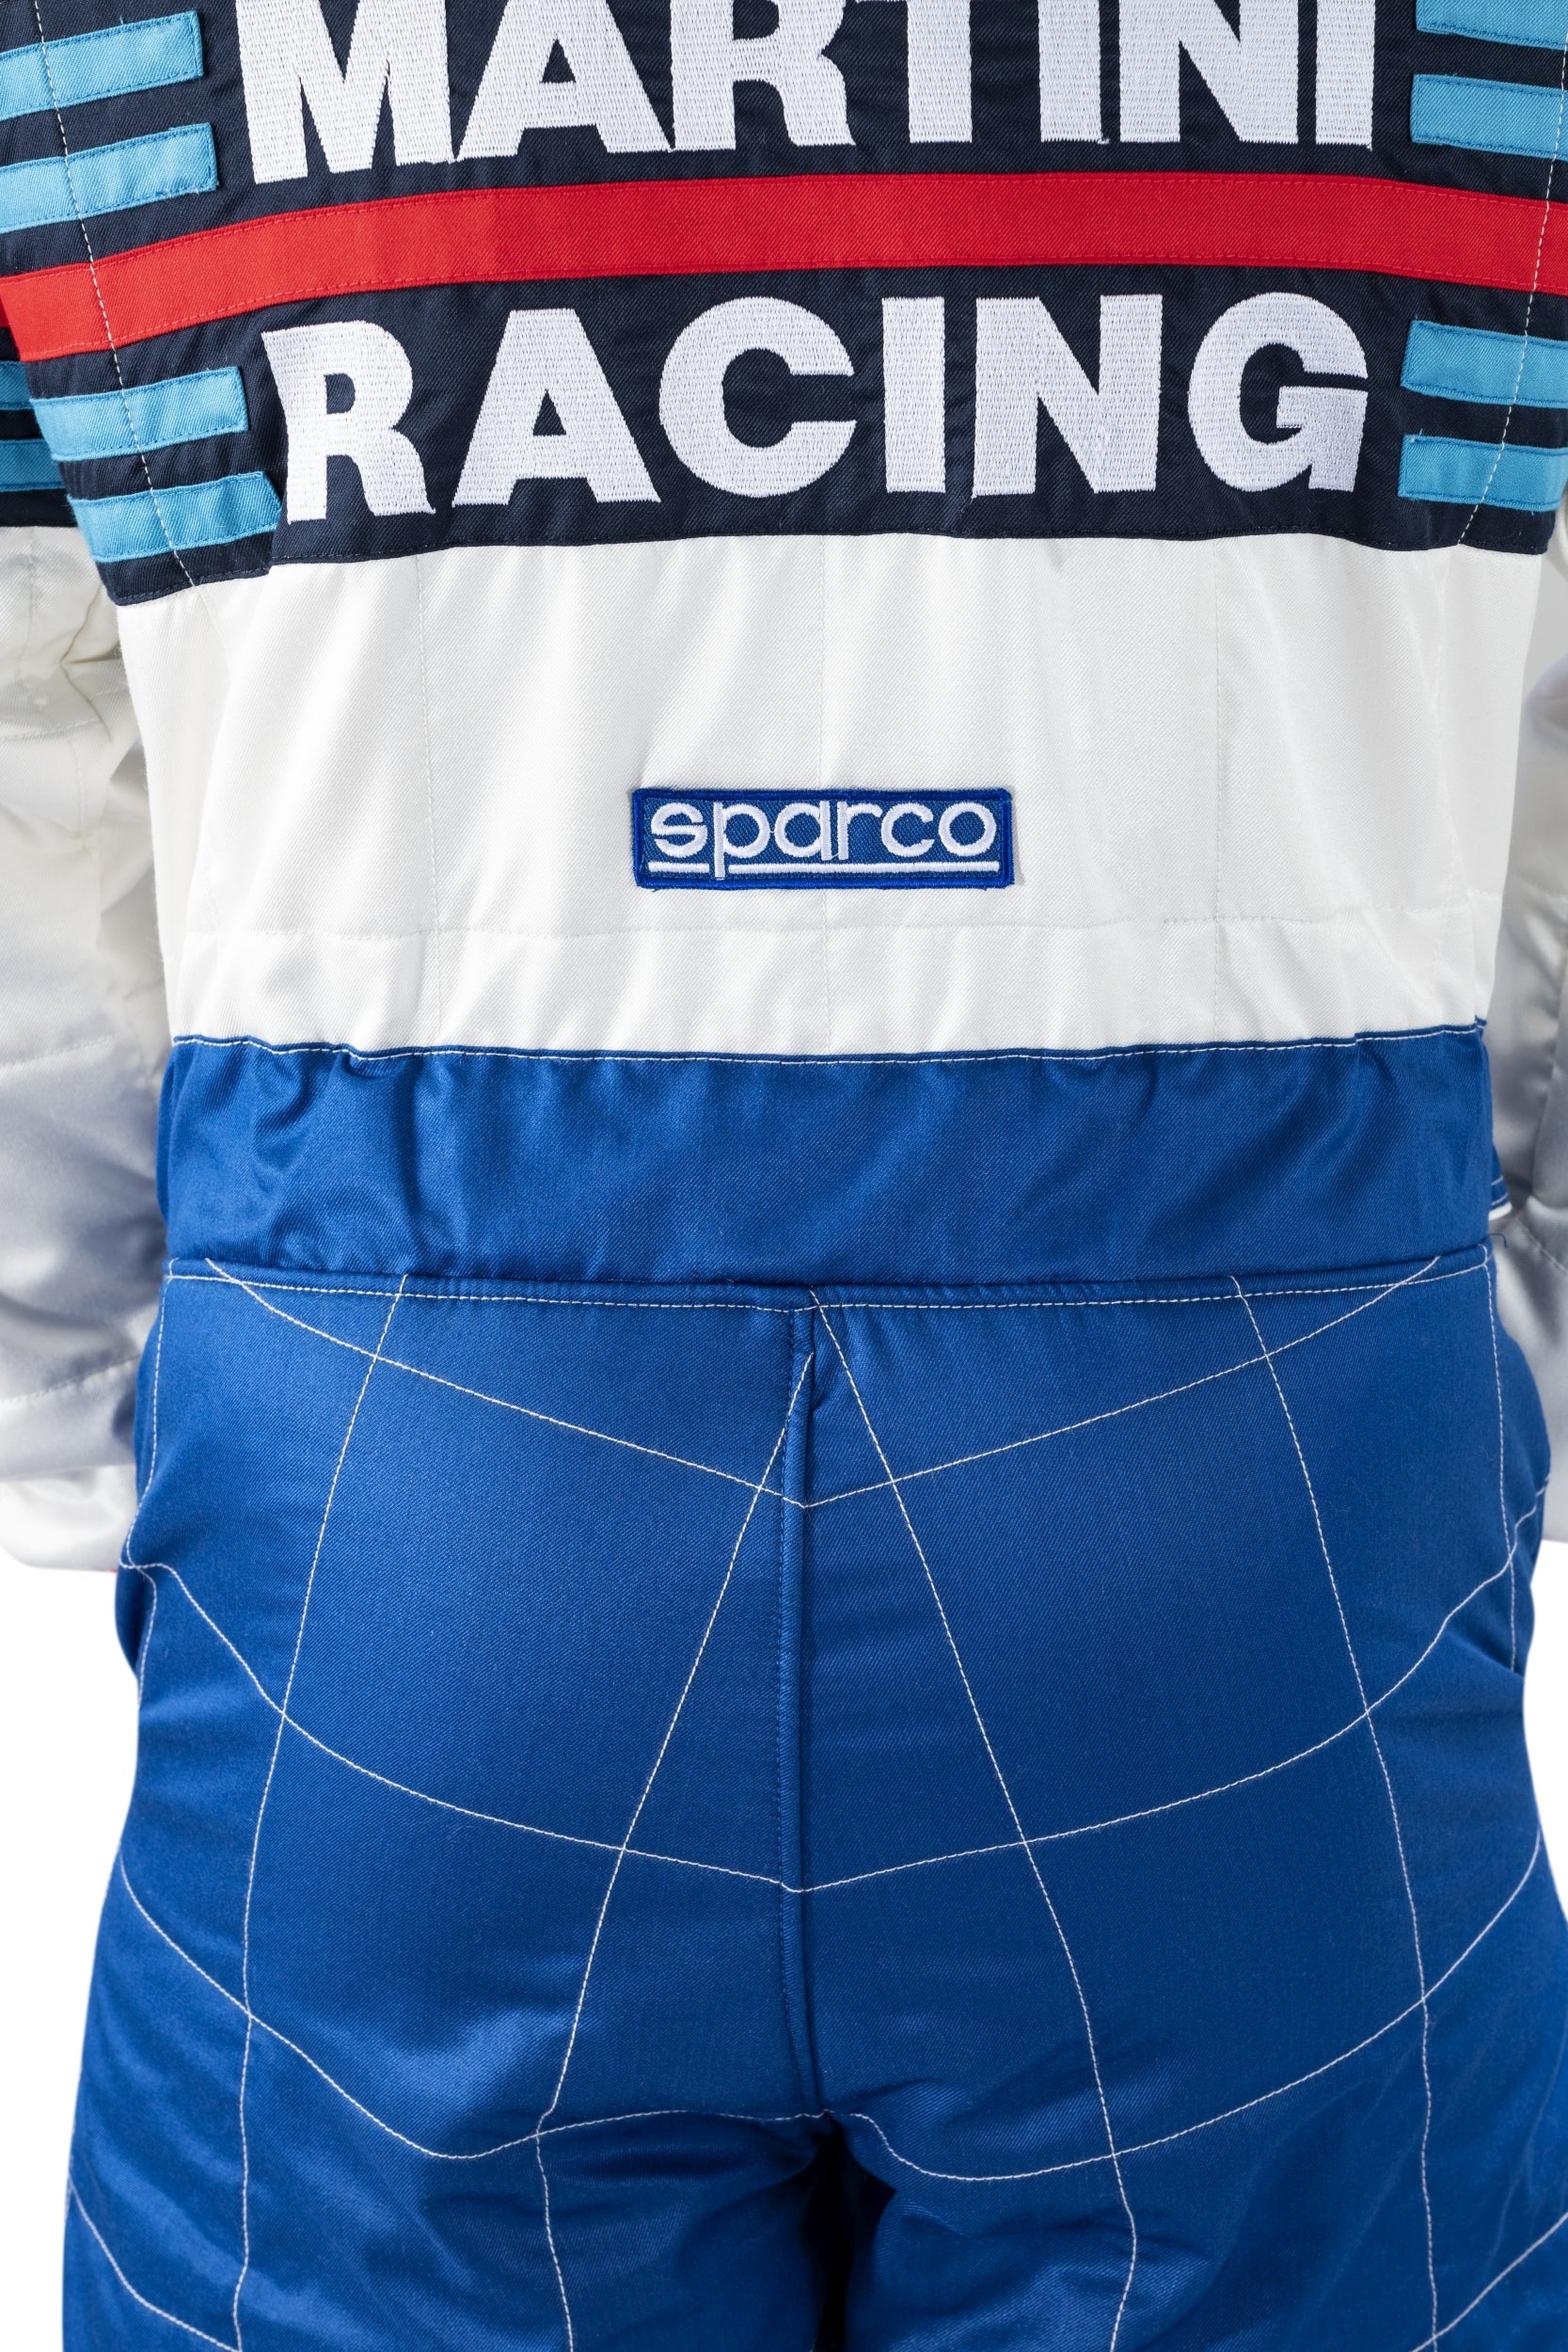 SPARCO 001144MR56AZ MARTINI RACING Replica '00 suit (R567), FIA8856-2018, blue, size 56 Photo-4 